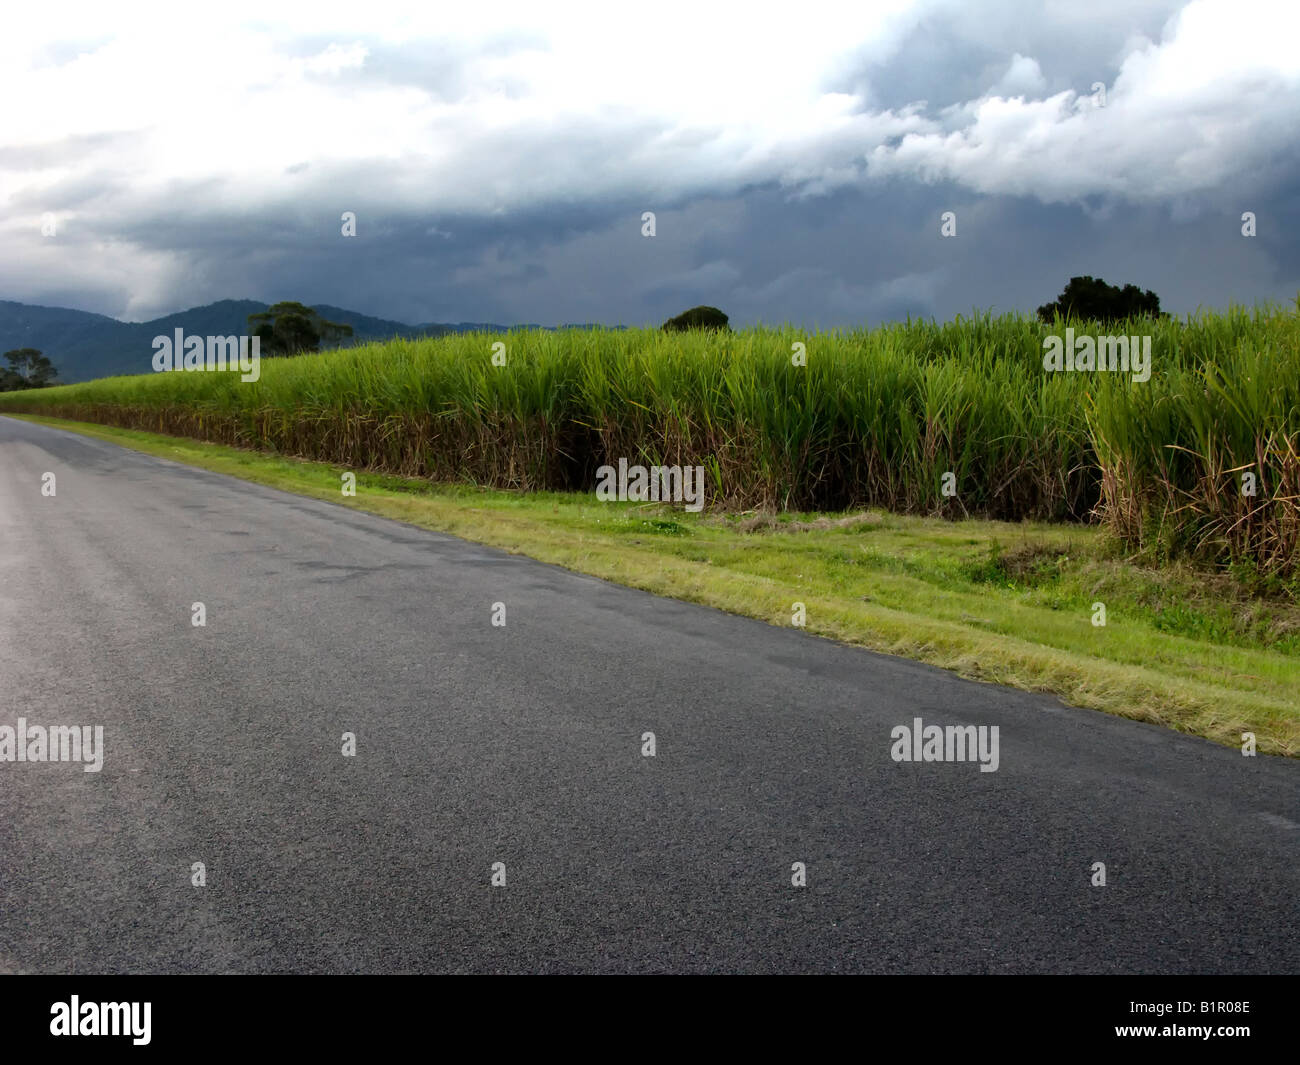 Road by Sugar Cane Plantation Australia Stock Photo